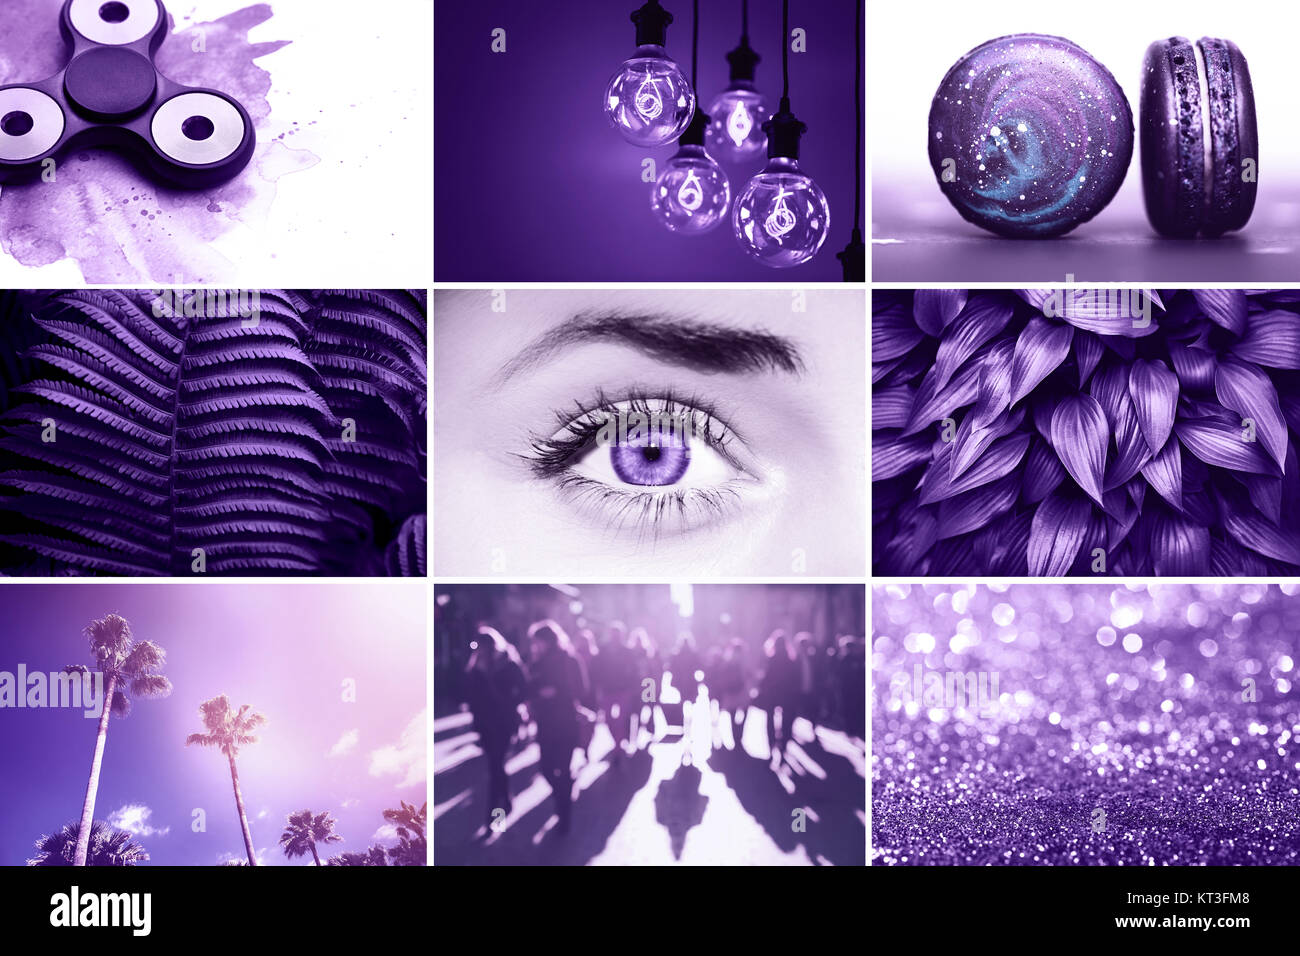 Ultra Violet Collage. Farbe des Jahres 2018 Stockfotografie - Alamy